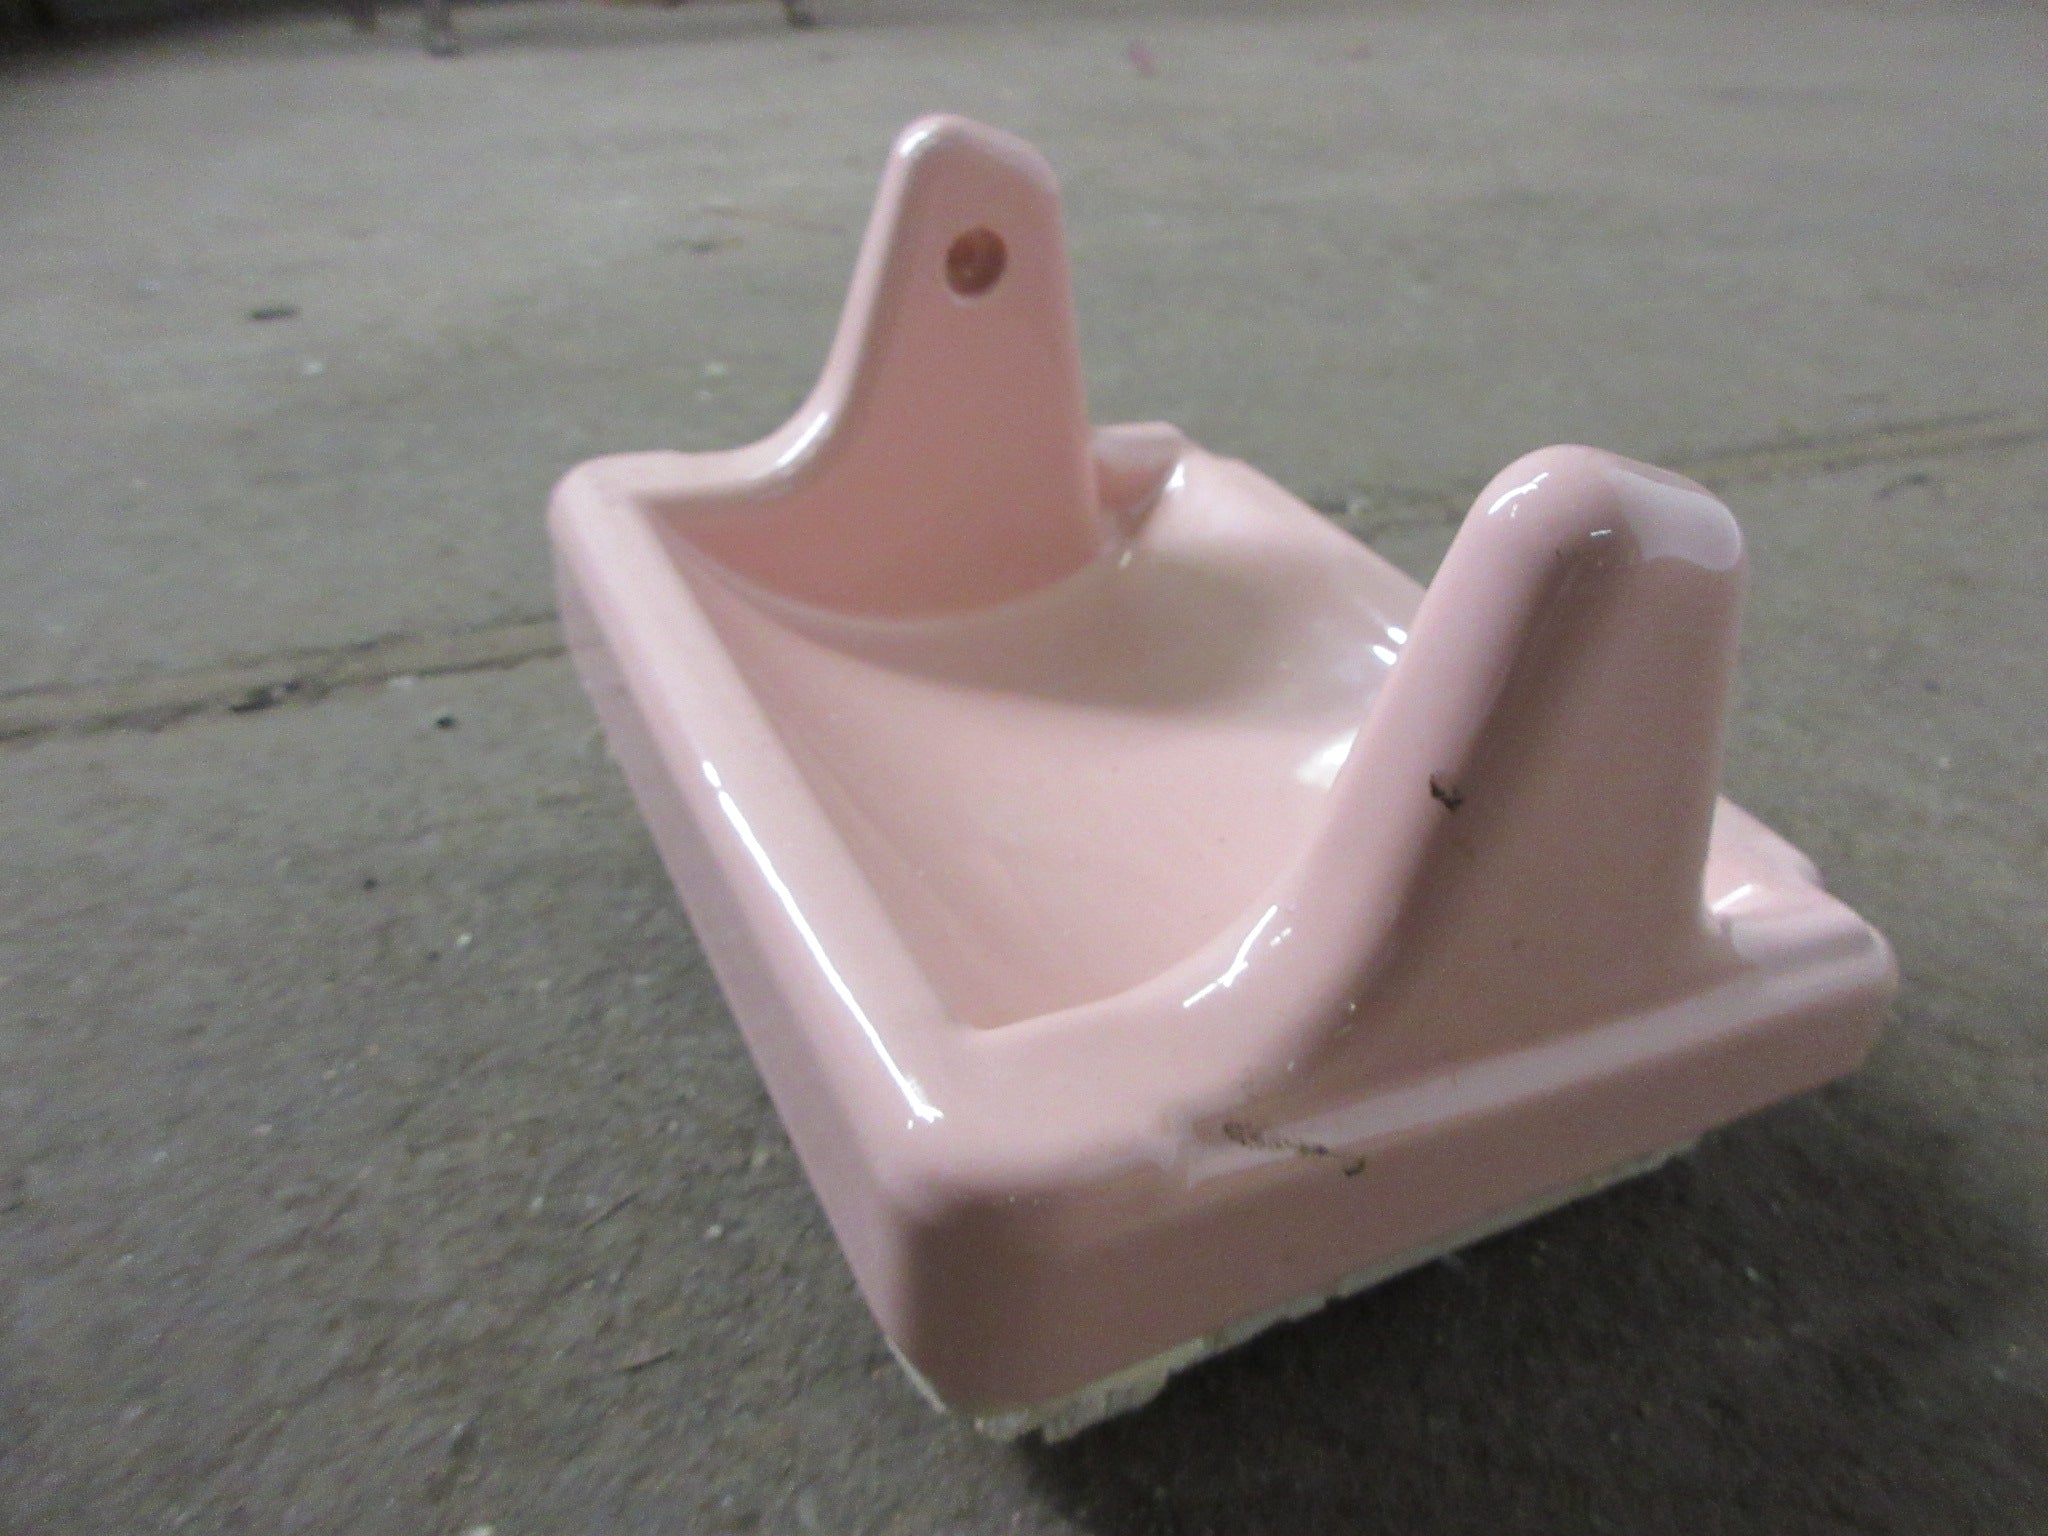 Vintage: Corallin Pink Glossy Ceramic Toilet Paper Holder: 1/4